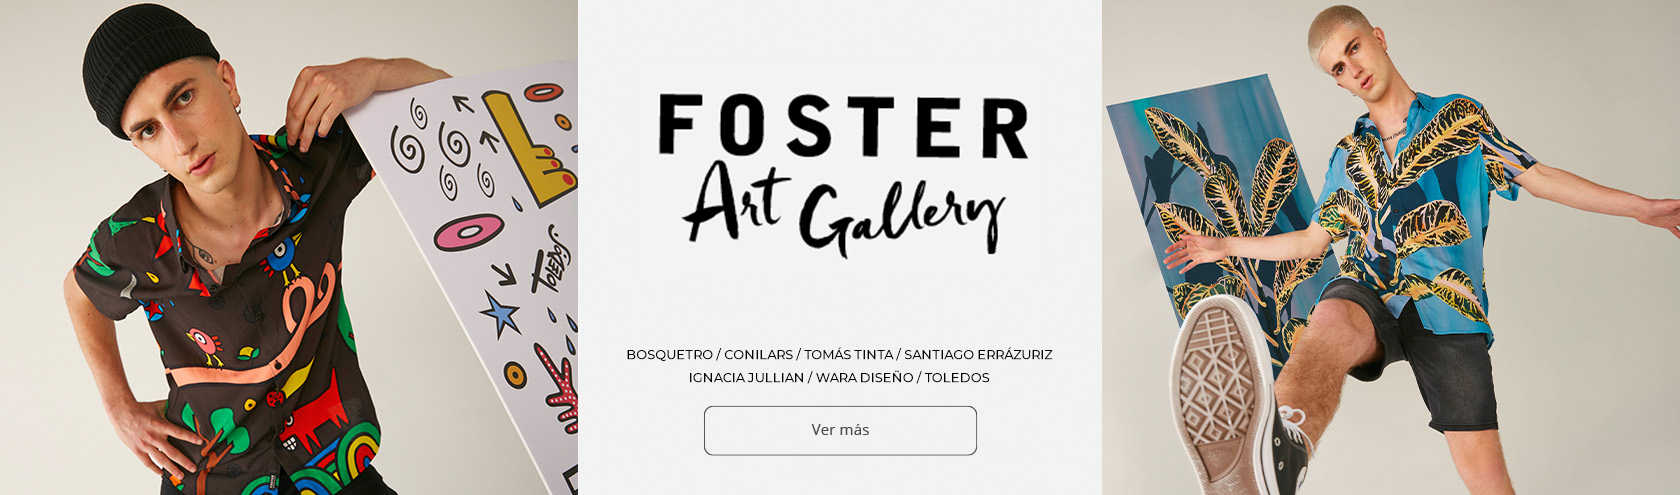 Art Gallery Foster